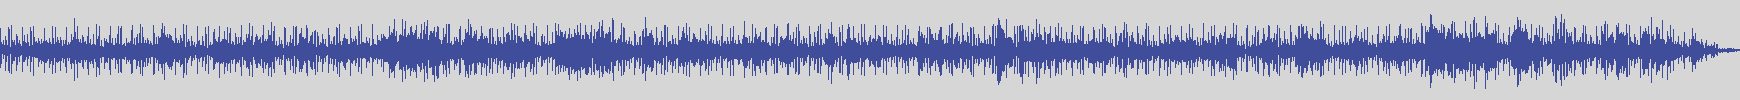 digiphonic_records [DPR008] Salvatore Adamo - Lei [Original Mix] audio wave form